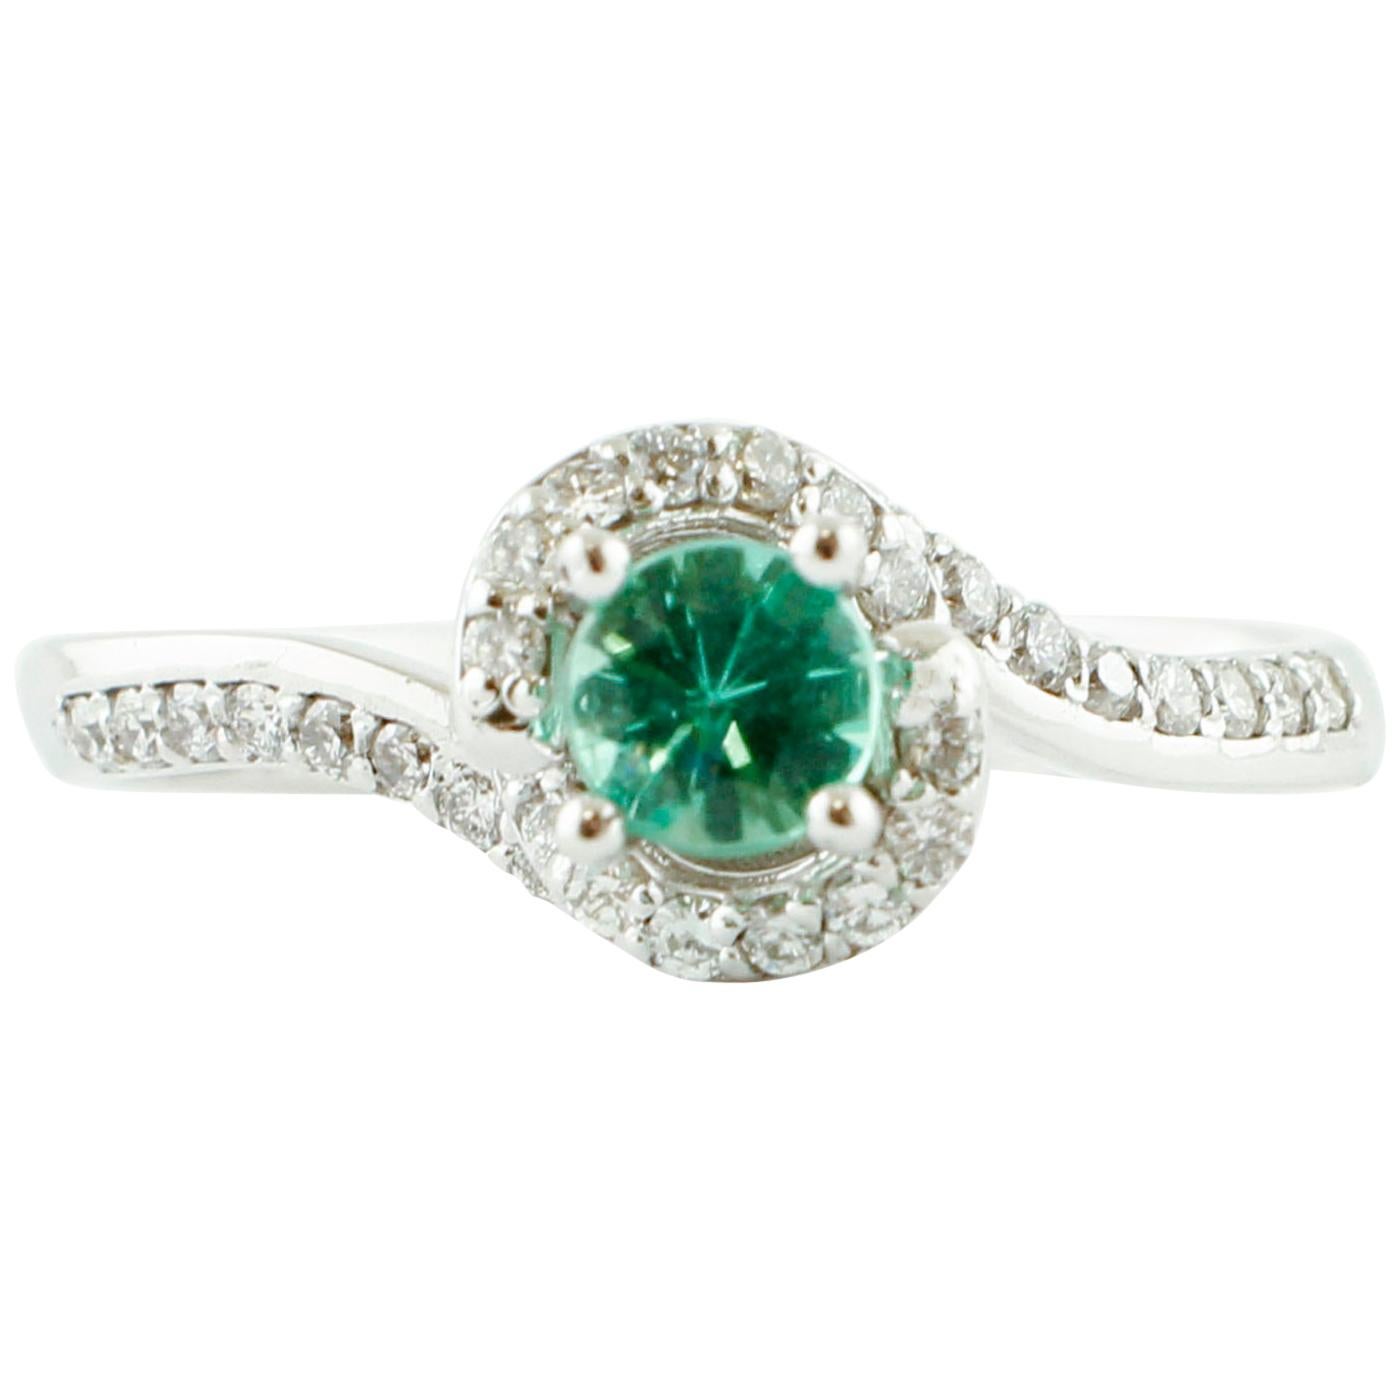 Diamonds, Emerald, 18 Karat White Gold Engagement/Solitaire Ring